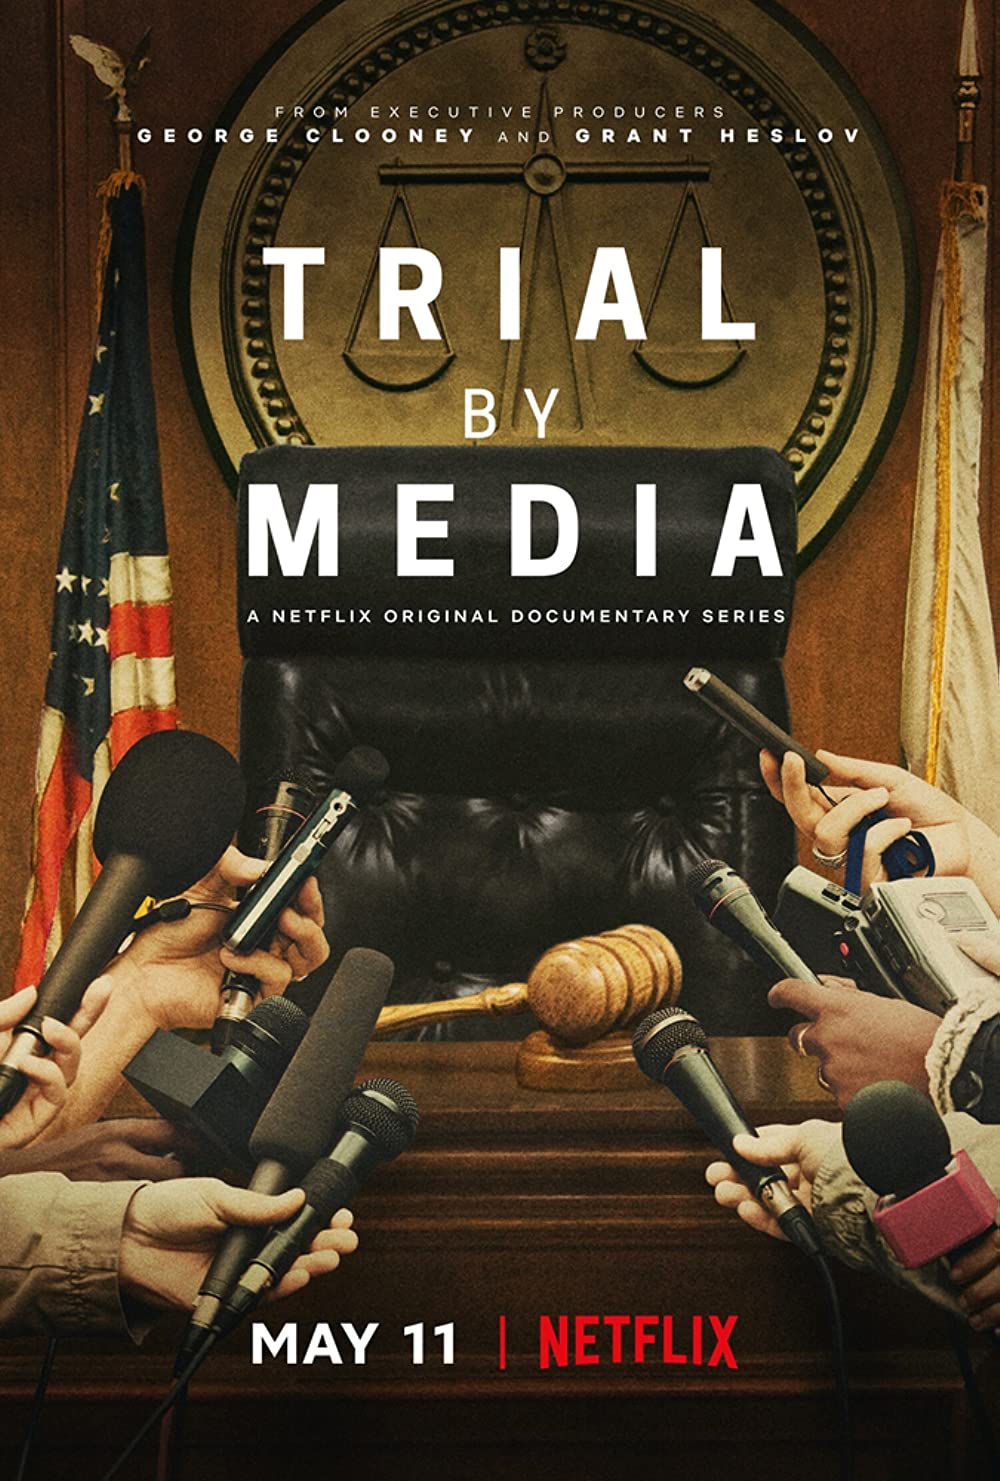 Filmbeschreibung zu Trial by Media